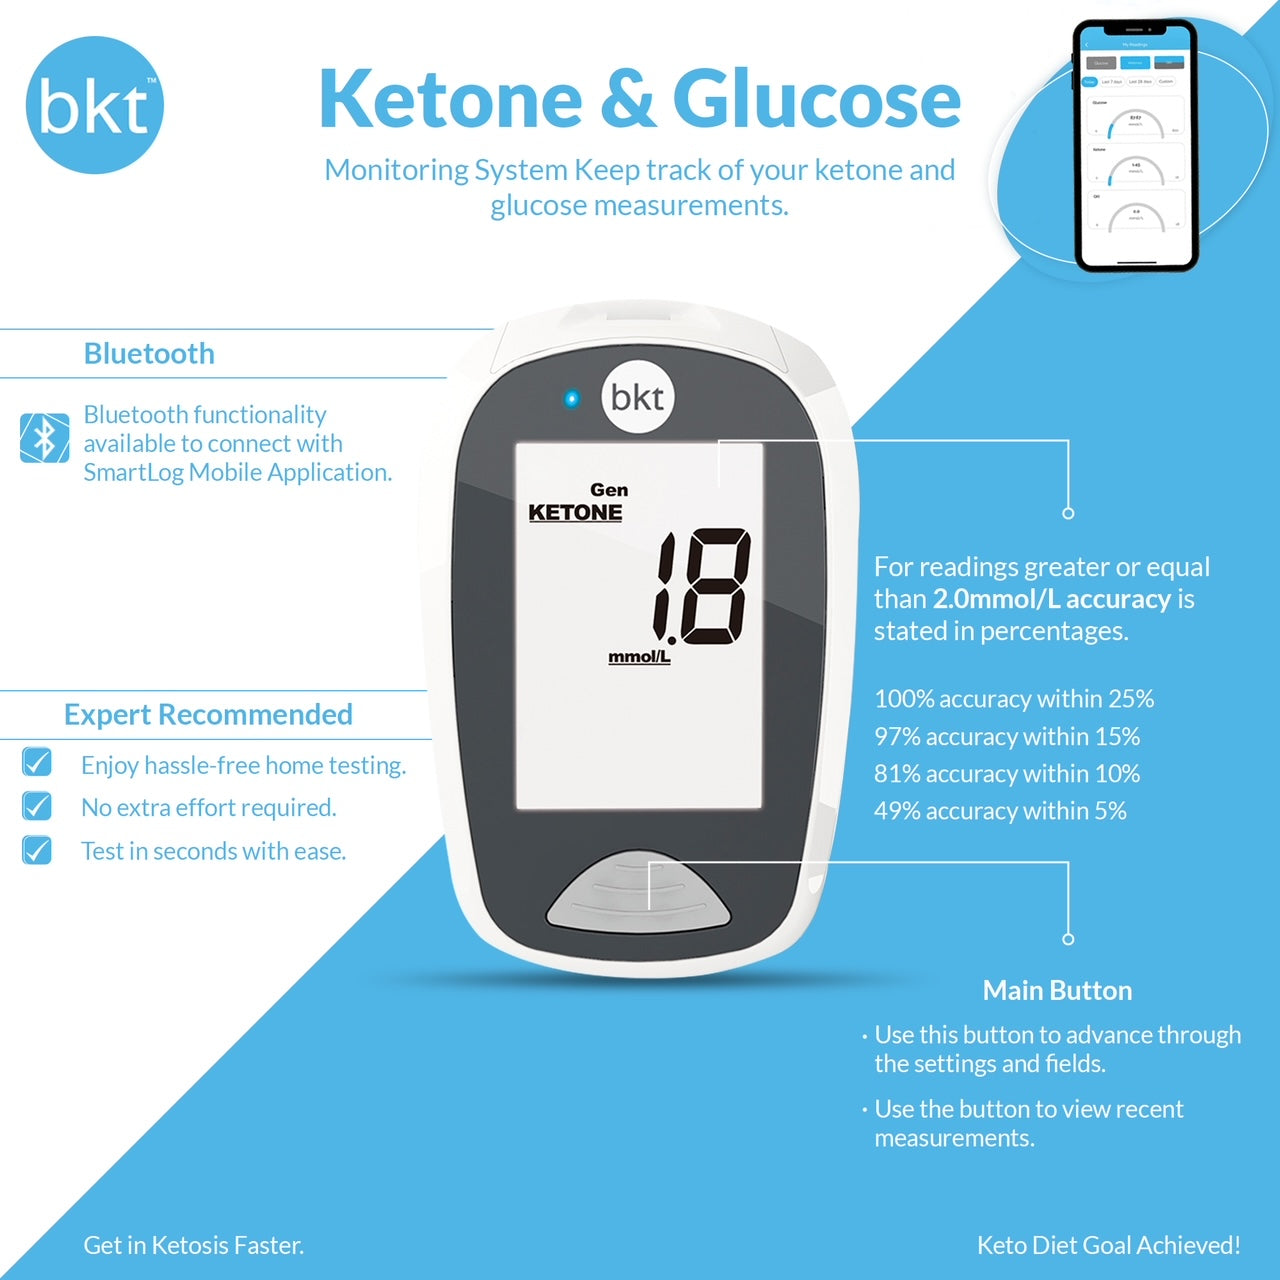 Blood Ketone Test Strips from BKT – Test Strips for Keto Mojo TD-4279 meter  - Best Ketone Test